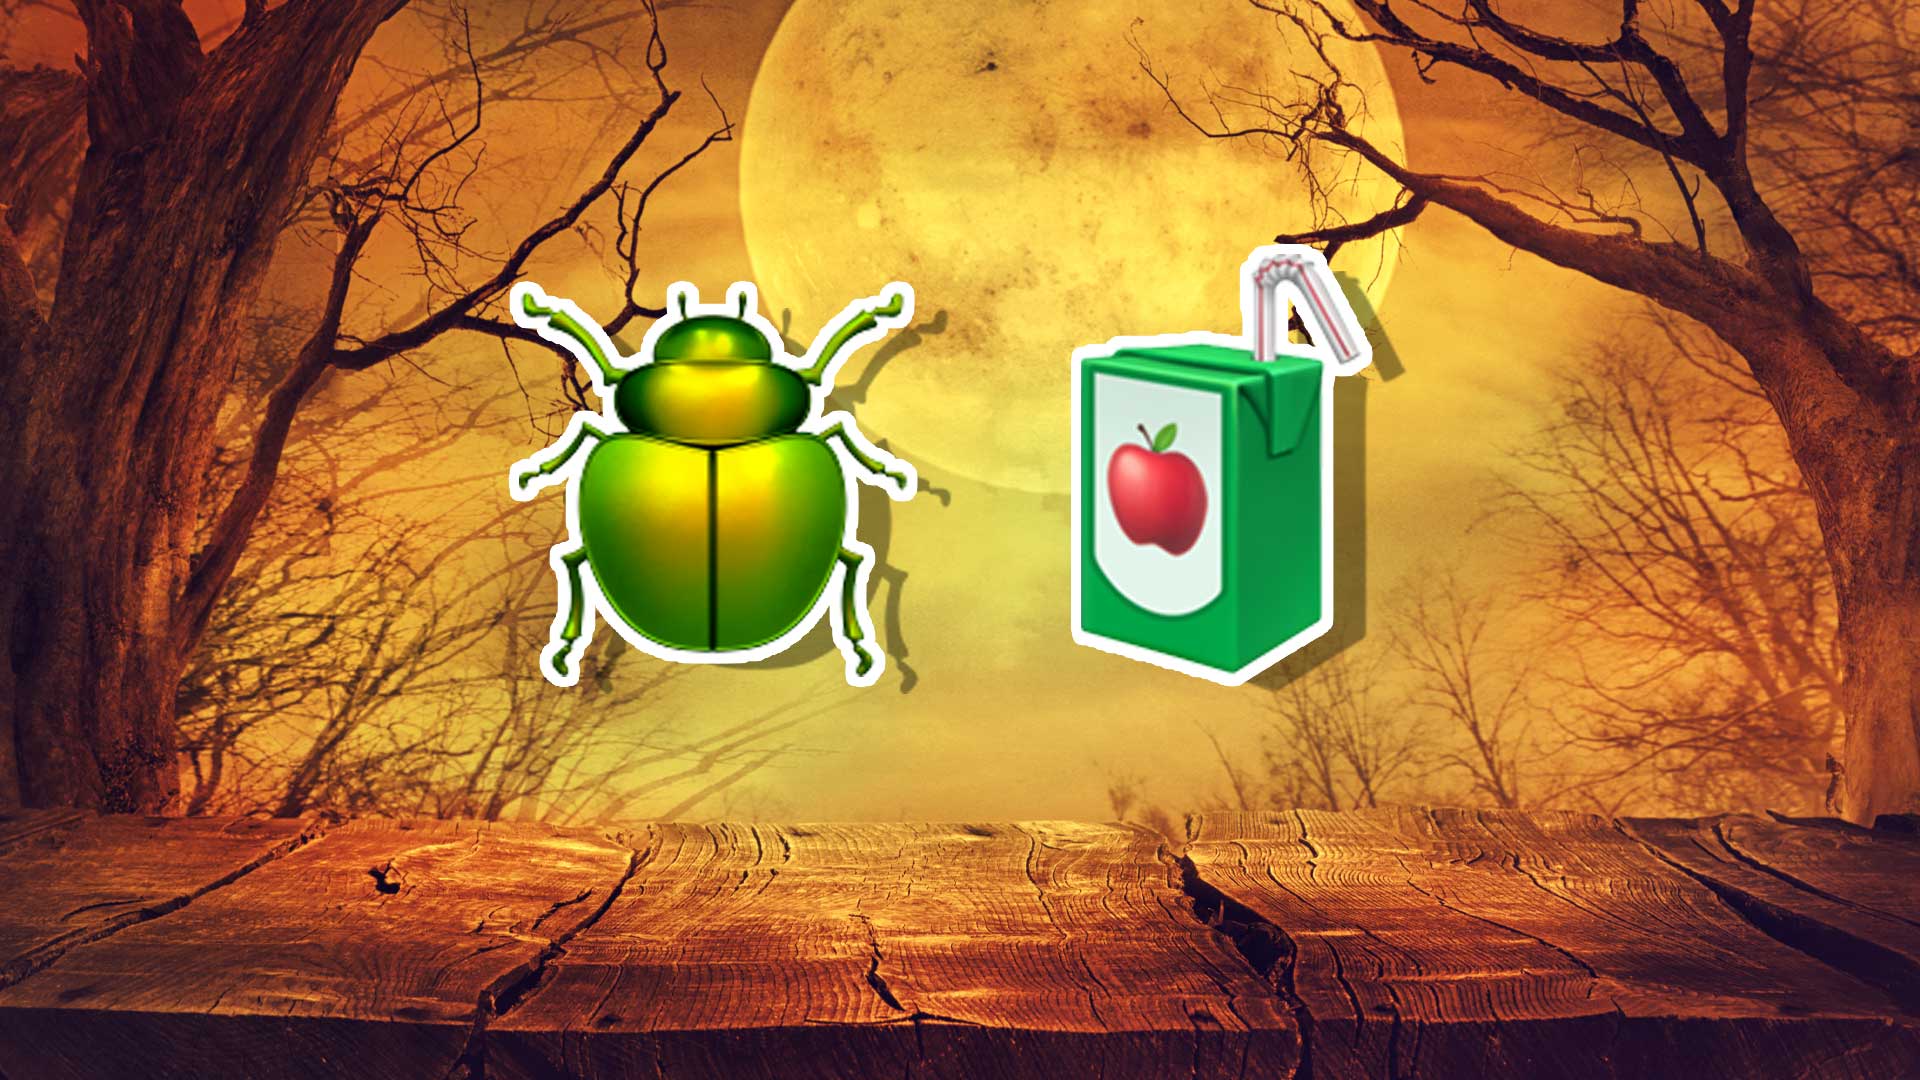 Halloween Emojis GIF on the App Store